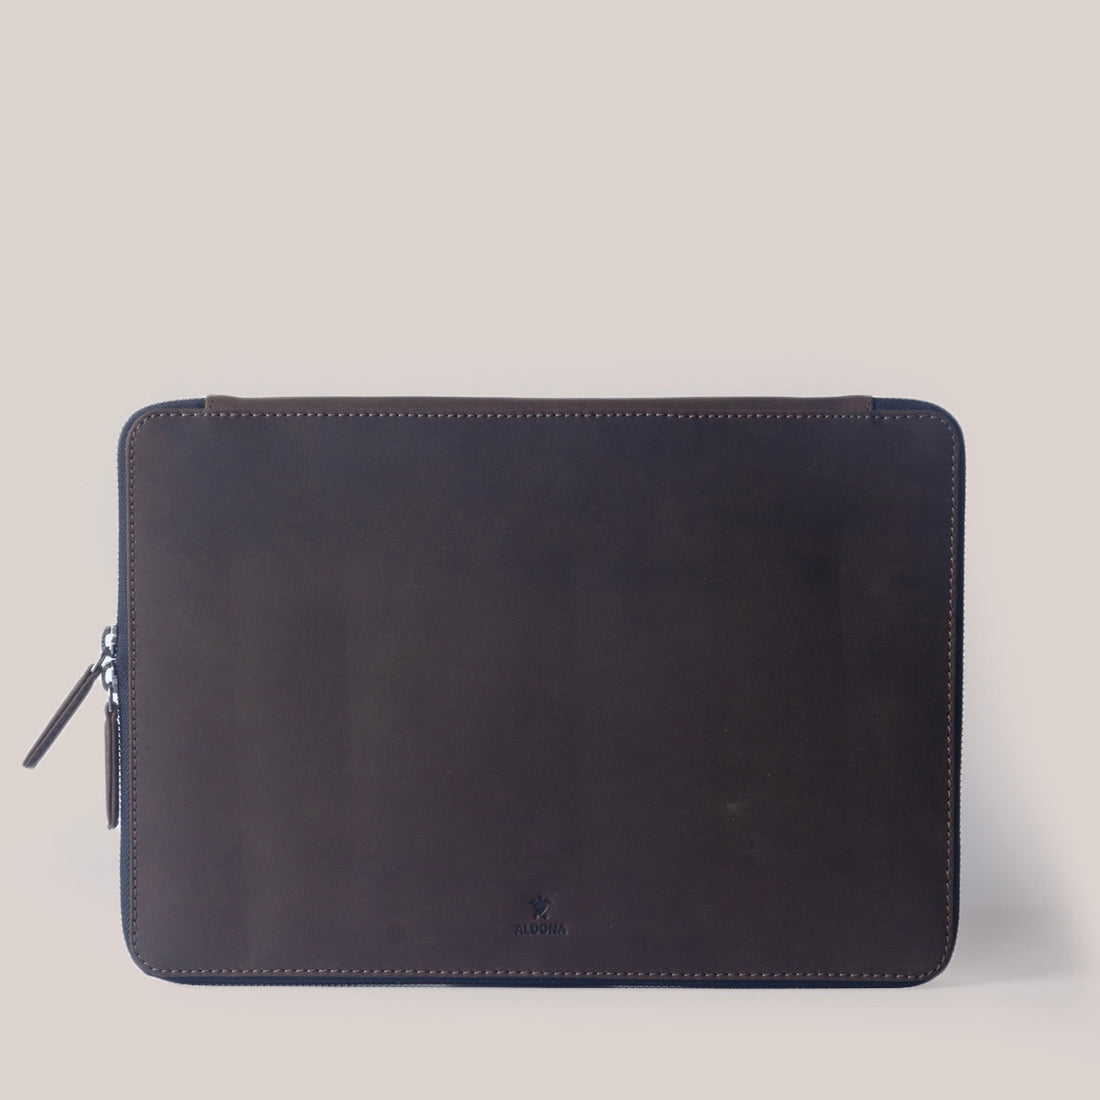 DELL XPS 13 Zippered Laptop Case - Vintage Tan